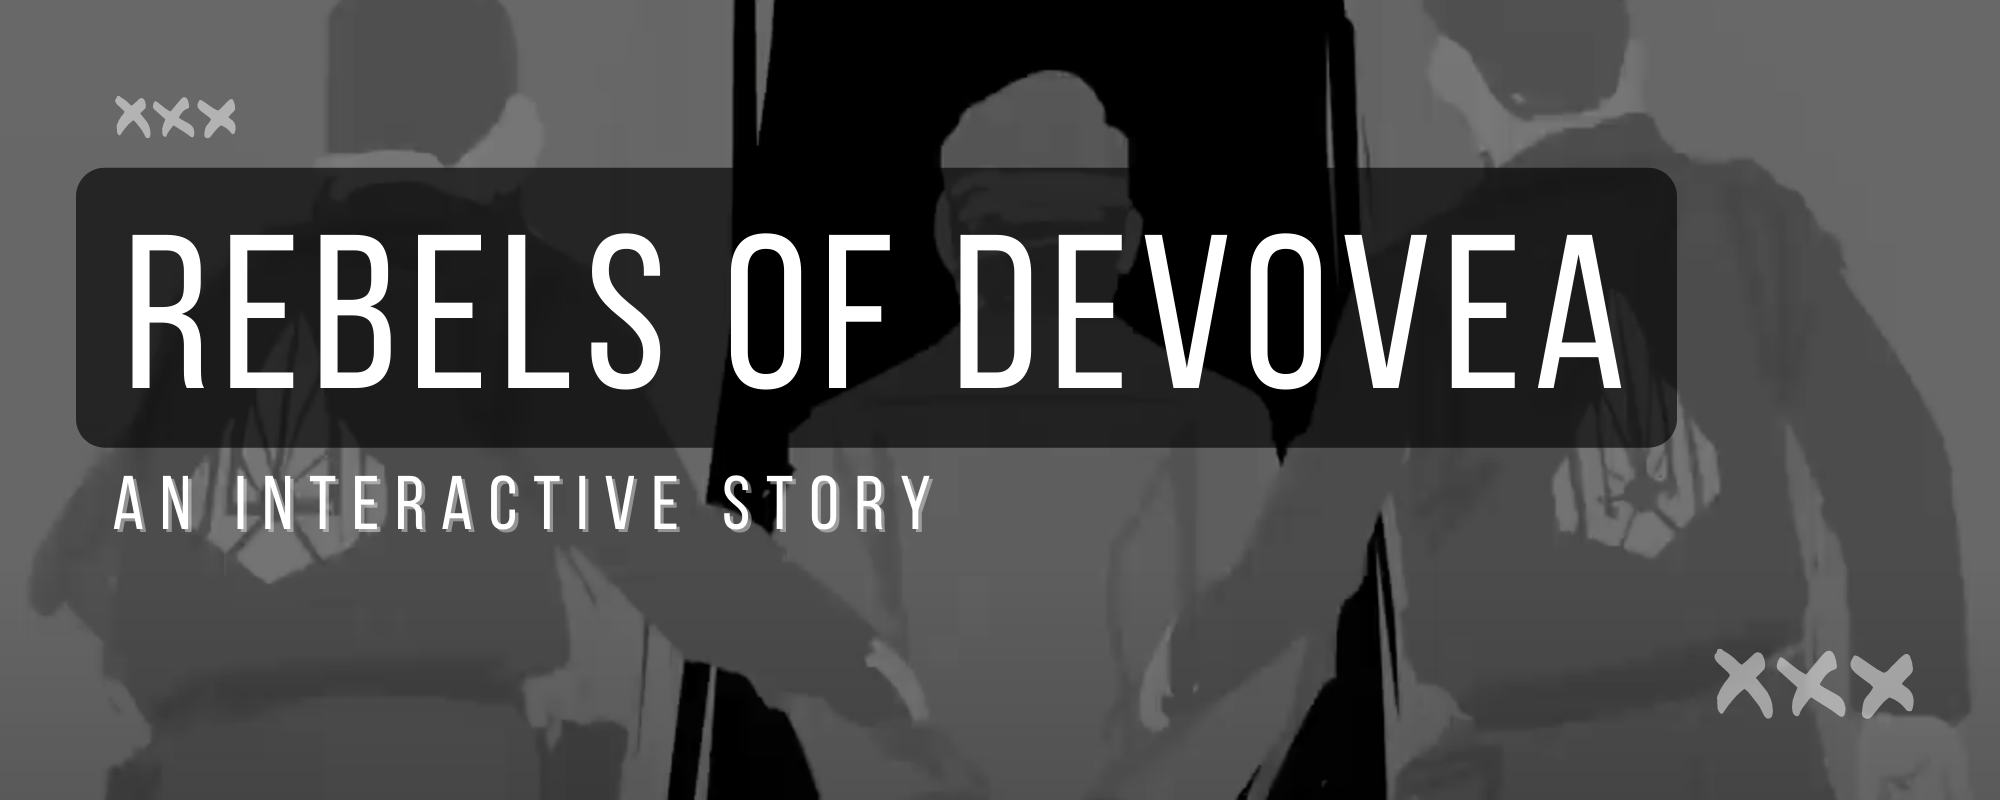 Rebels of Devovea